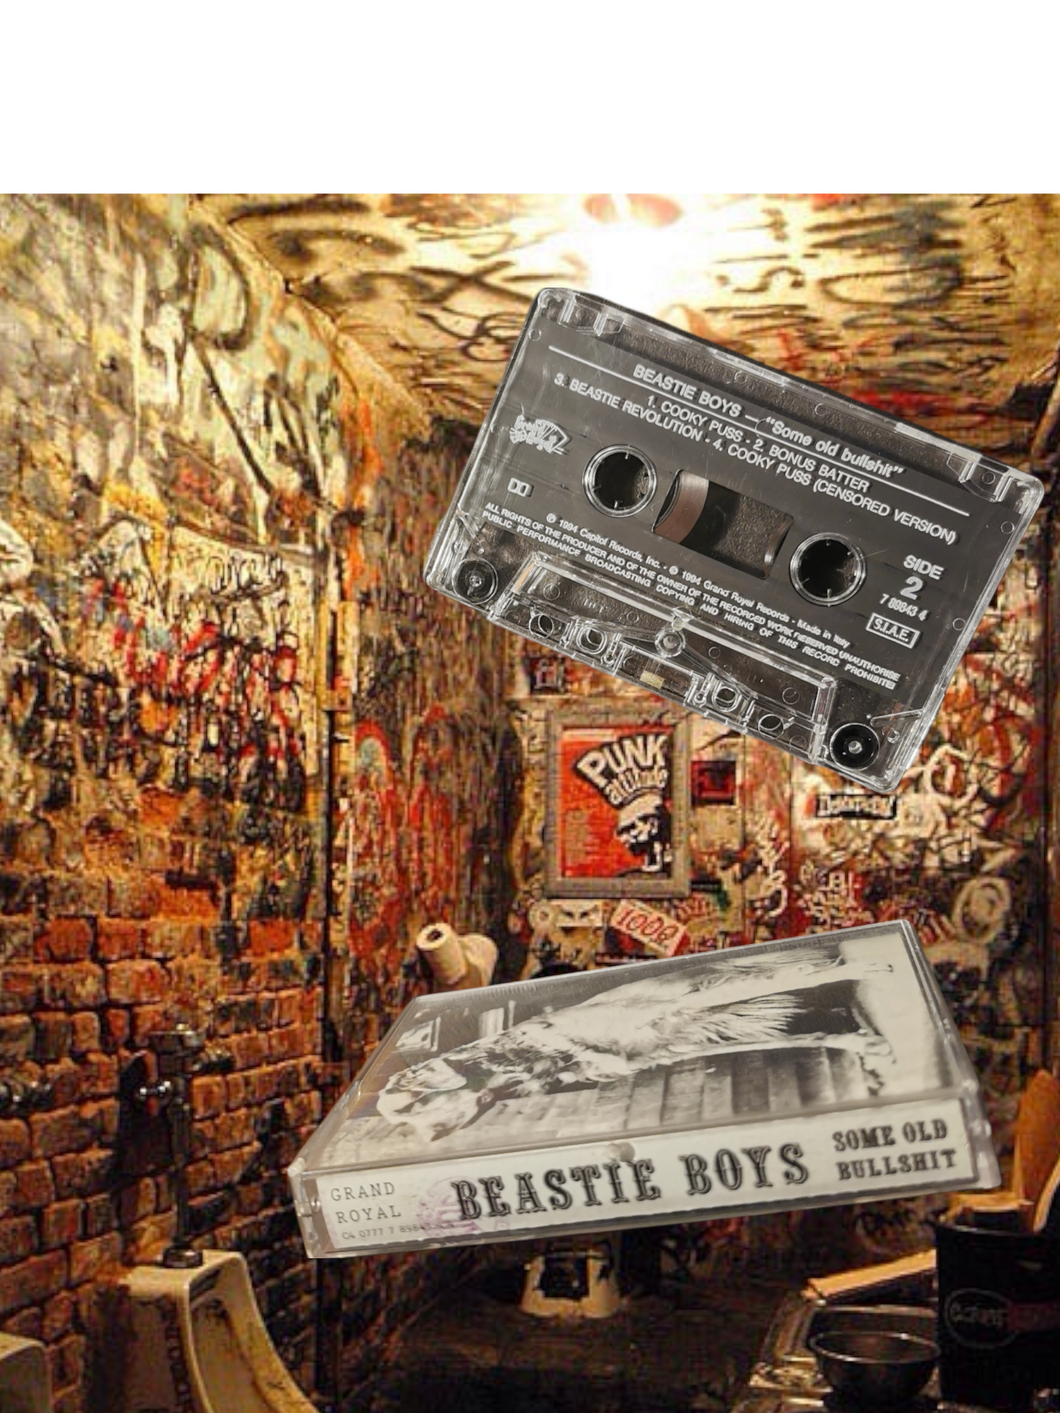 Beastie Boys - Some old bullshit (original 1994 italian press)